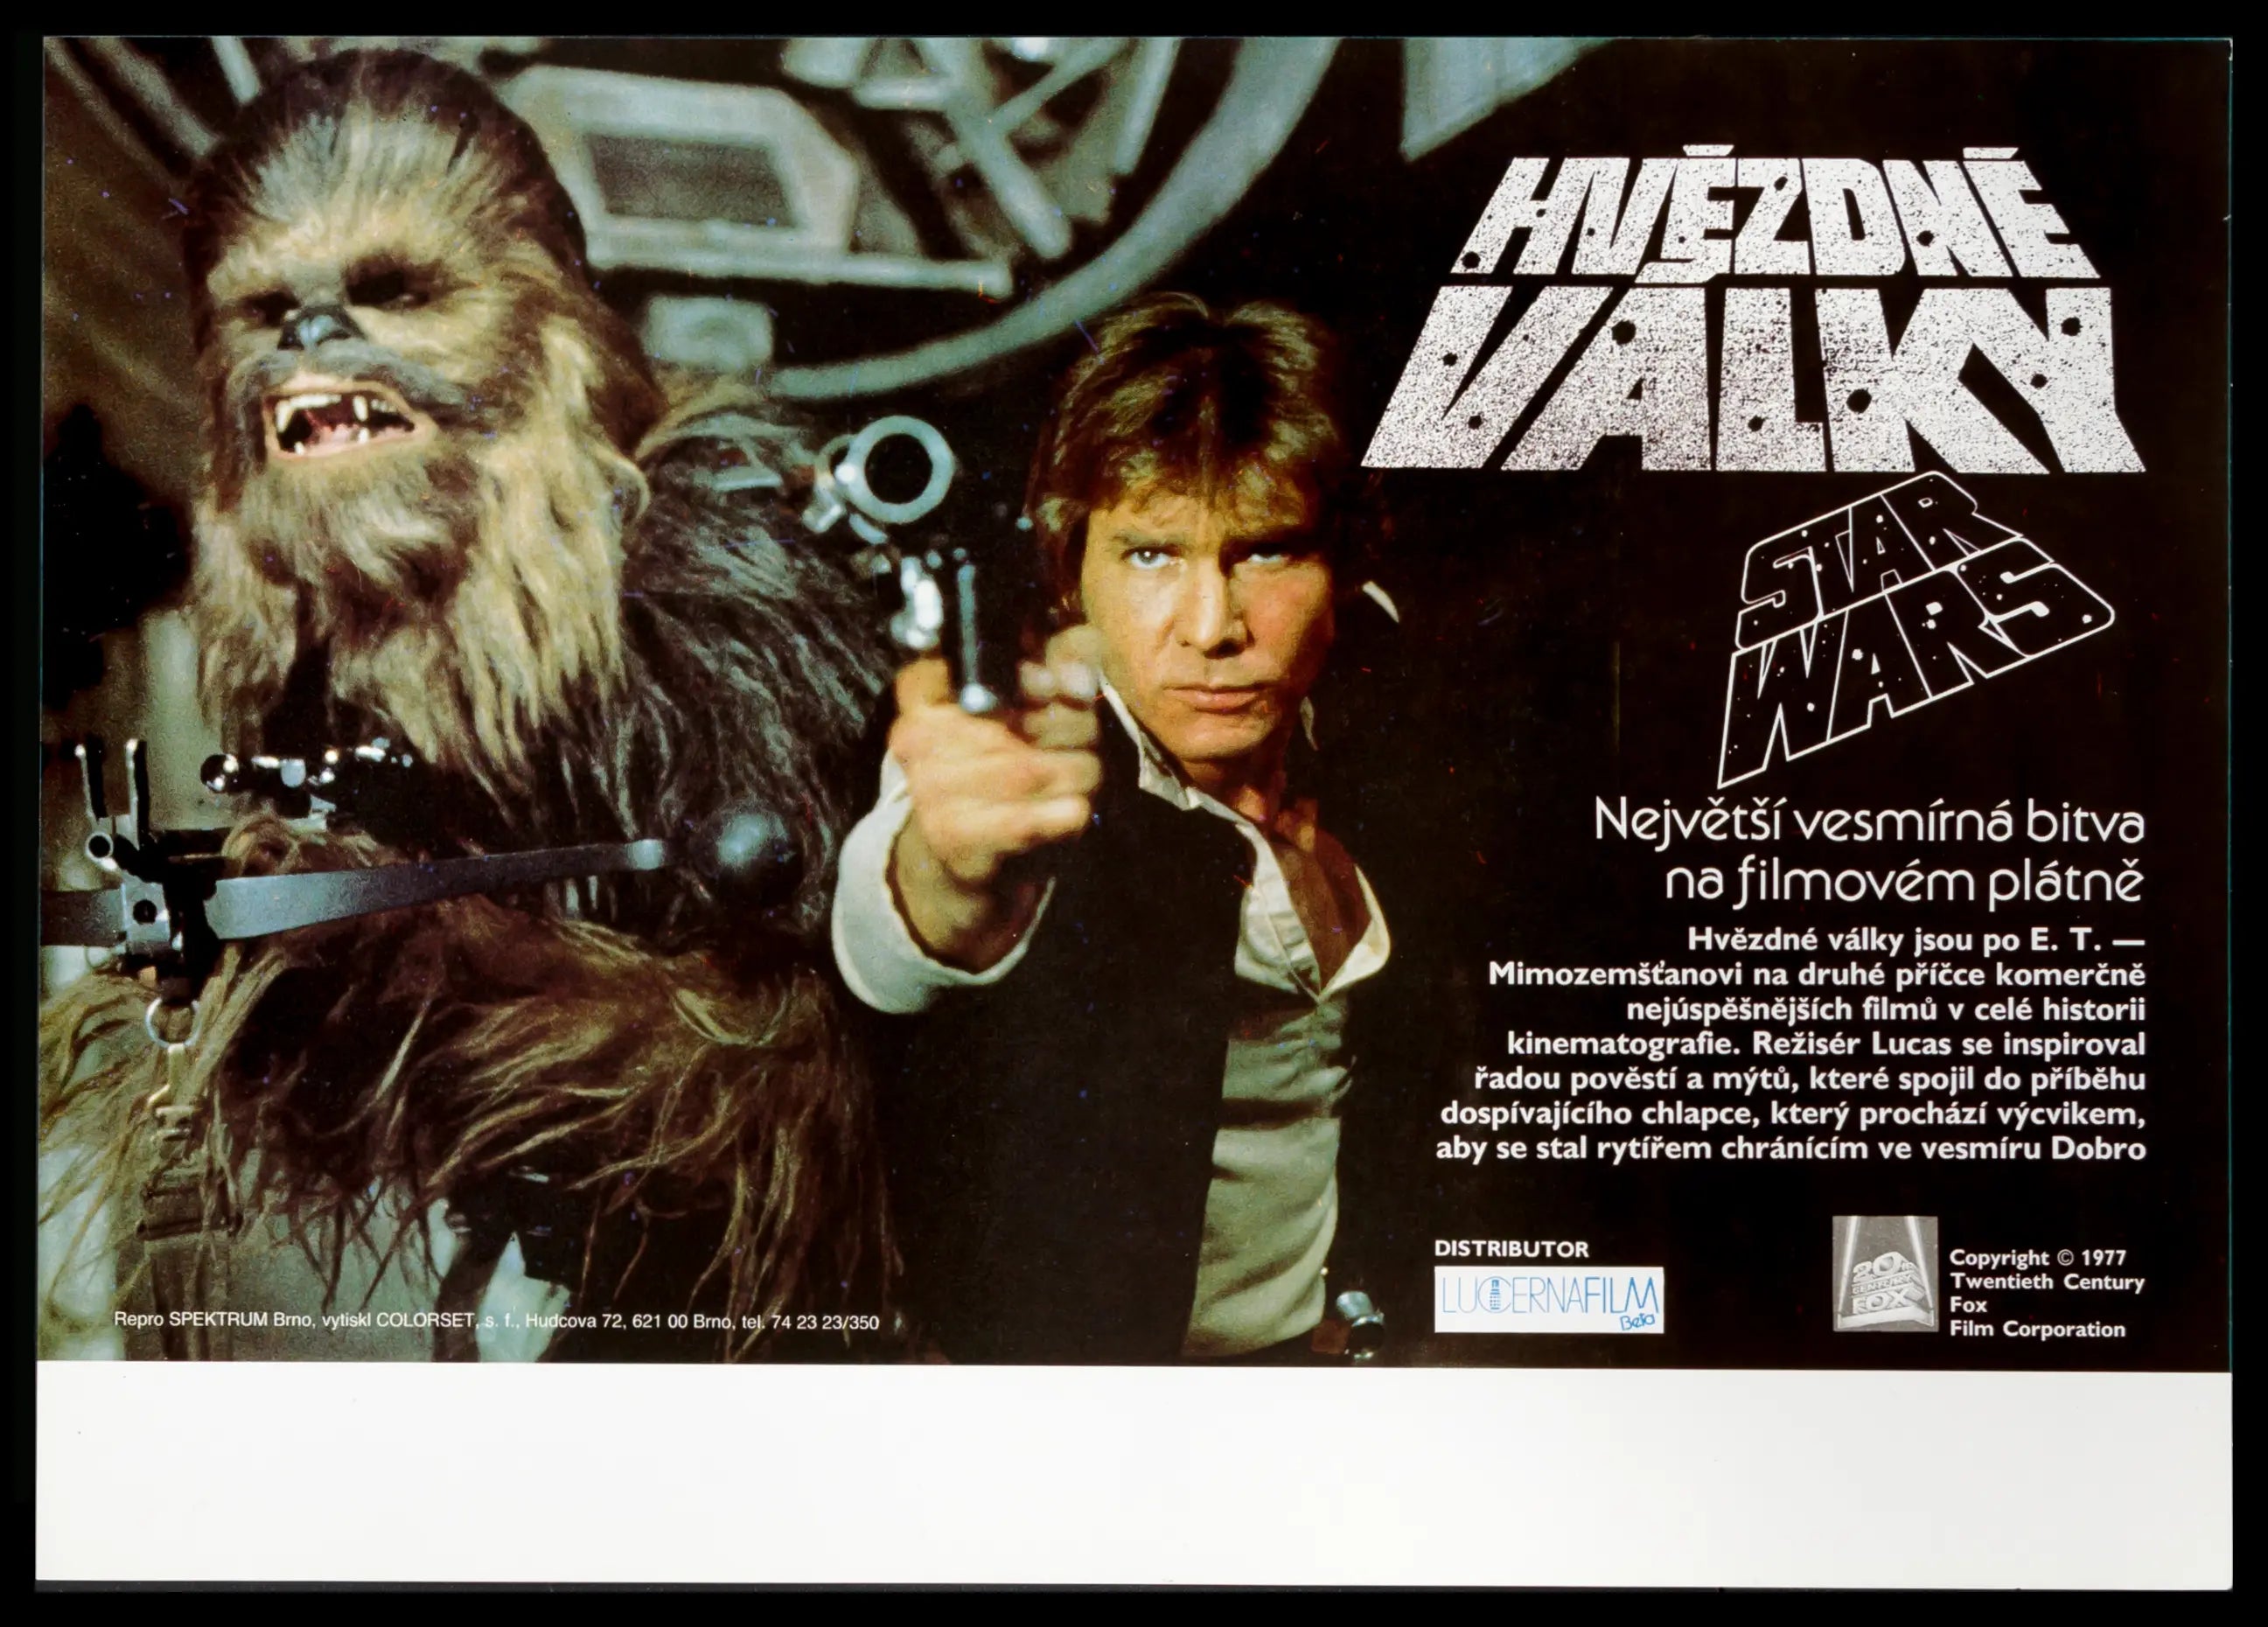 Geletterdheid vriendelijke groet staal Star Wars (1977) Original Czech Republic A4 Movie Poster - Original Film  Art - Vintage Movie Posters